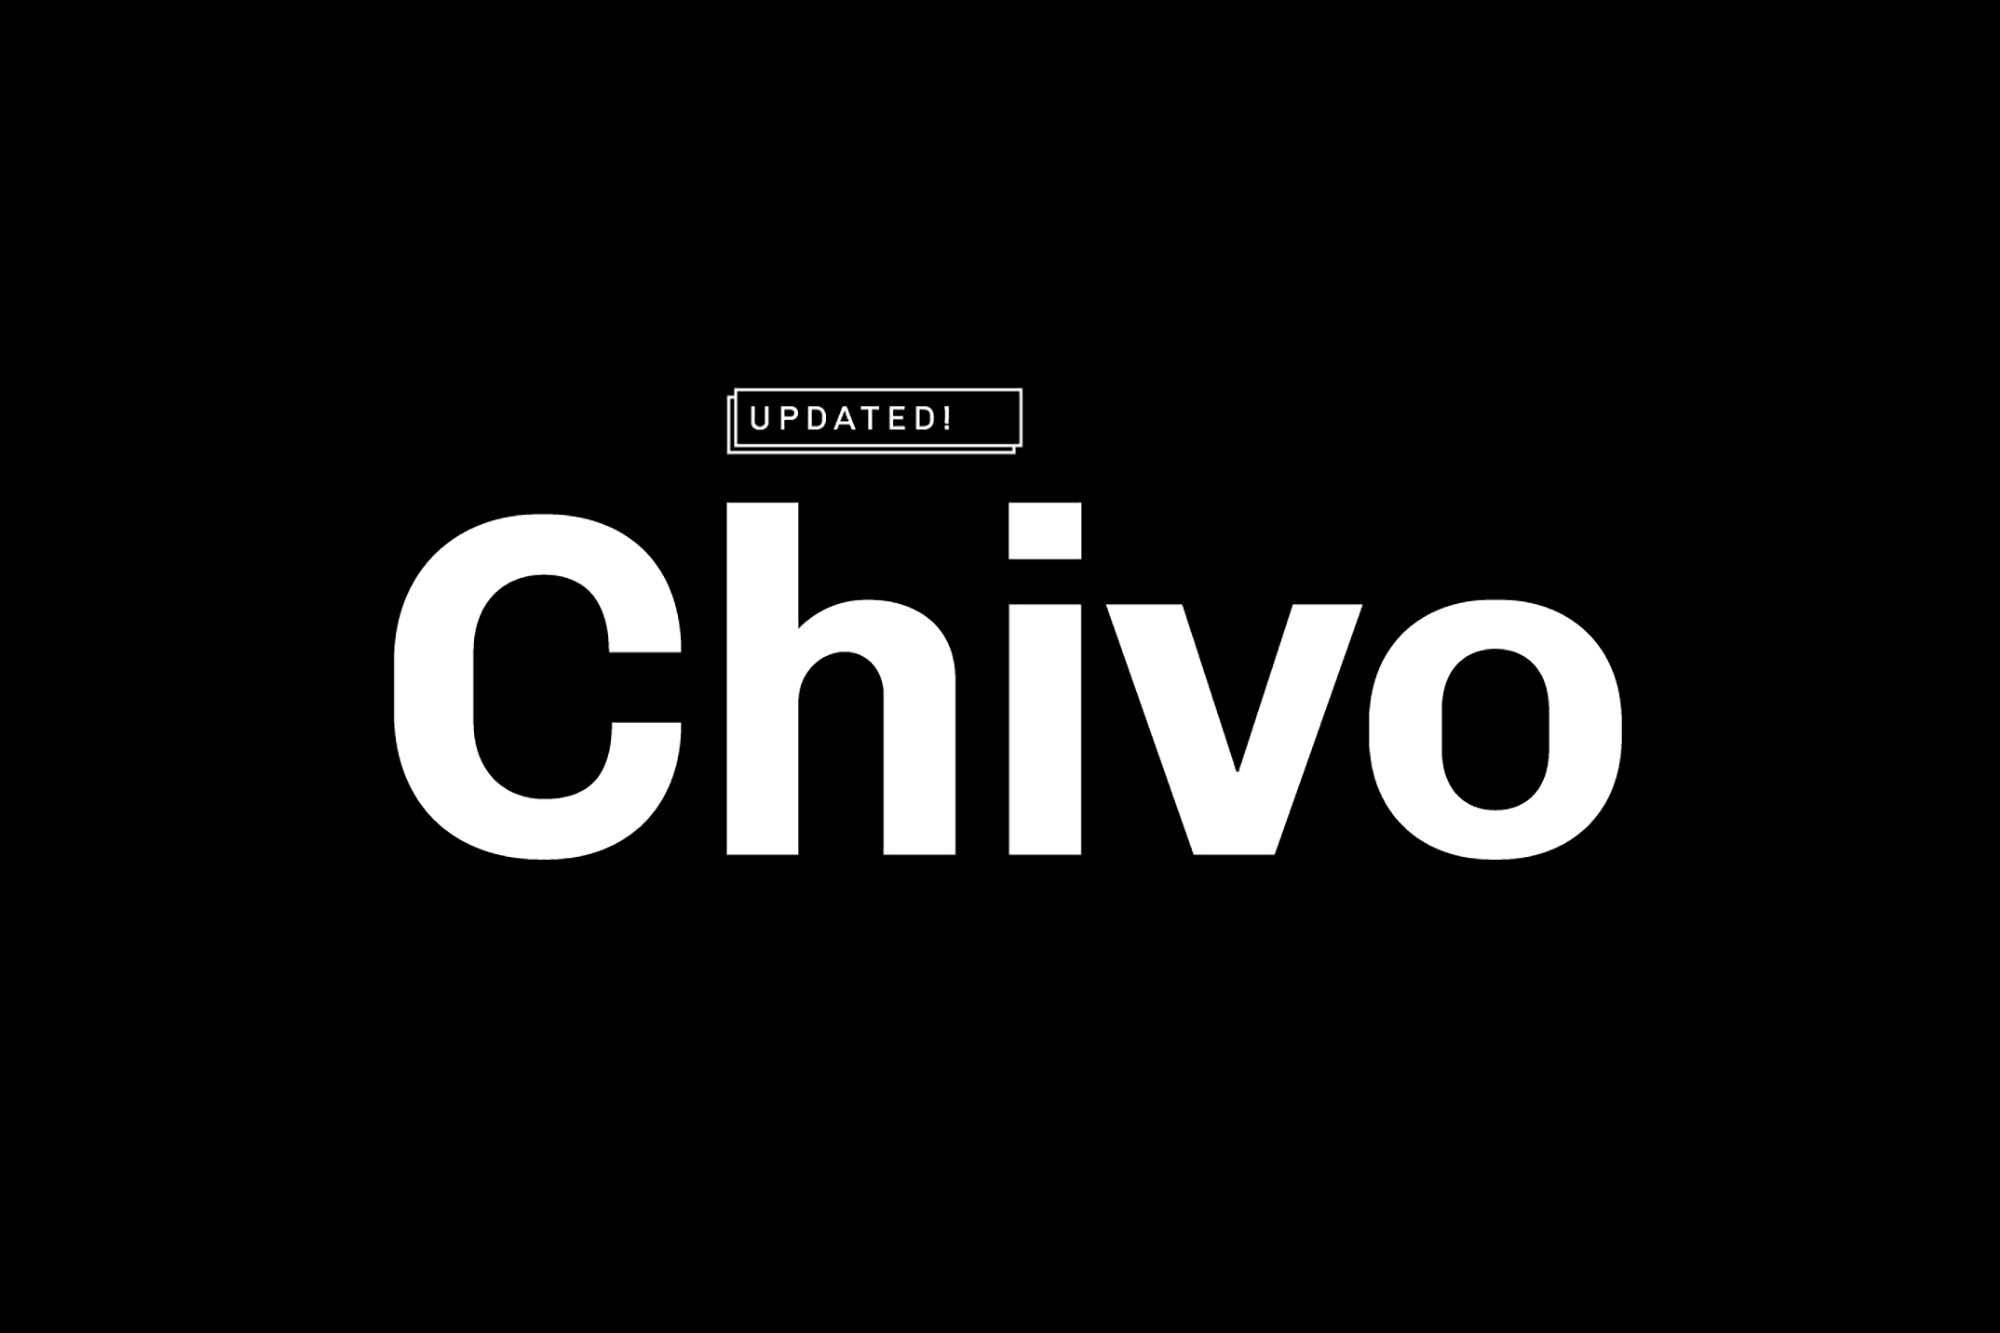 Chivo Sans Serif Font